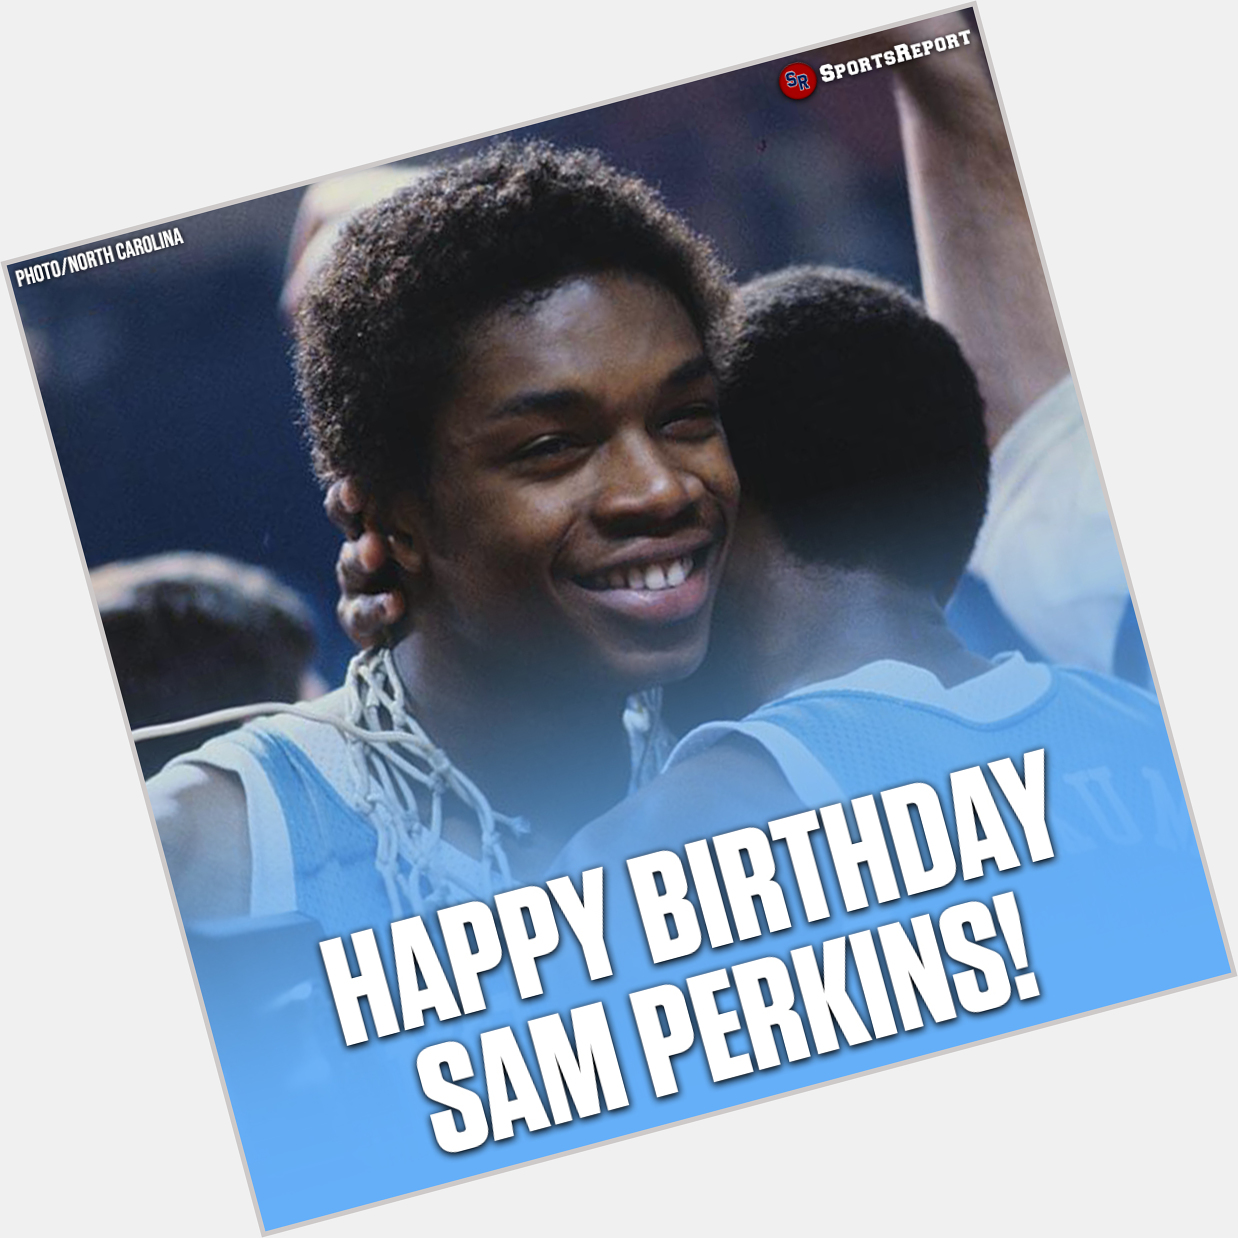  Fans, let\s wish Legend Sam Perkins a Happy Birthday! 